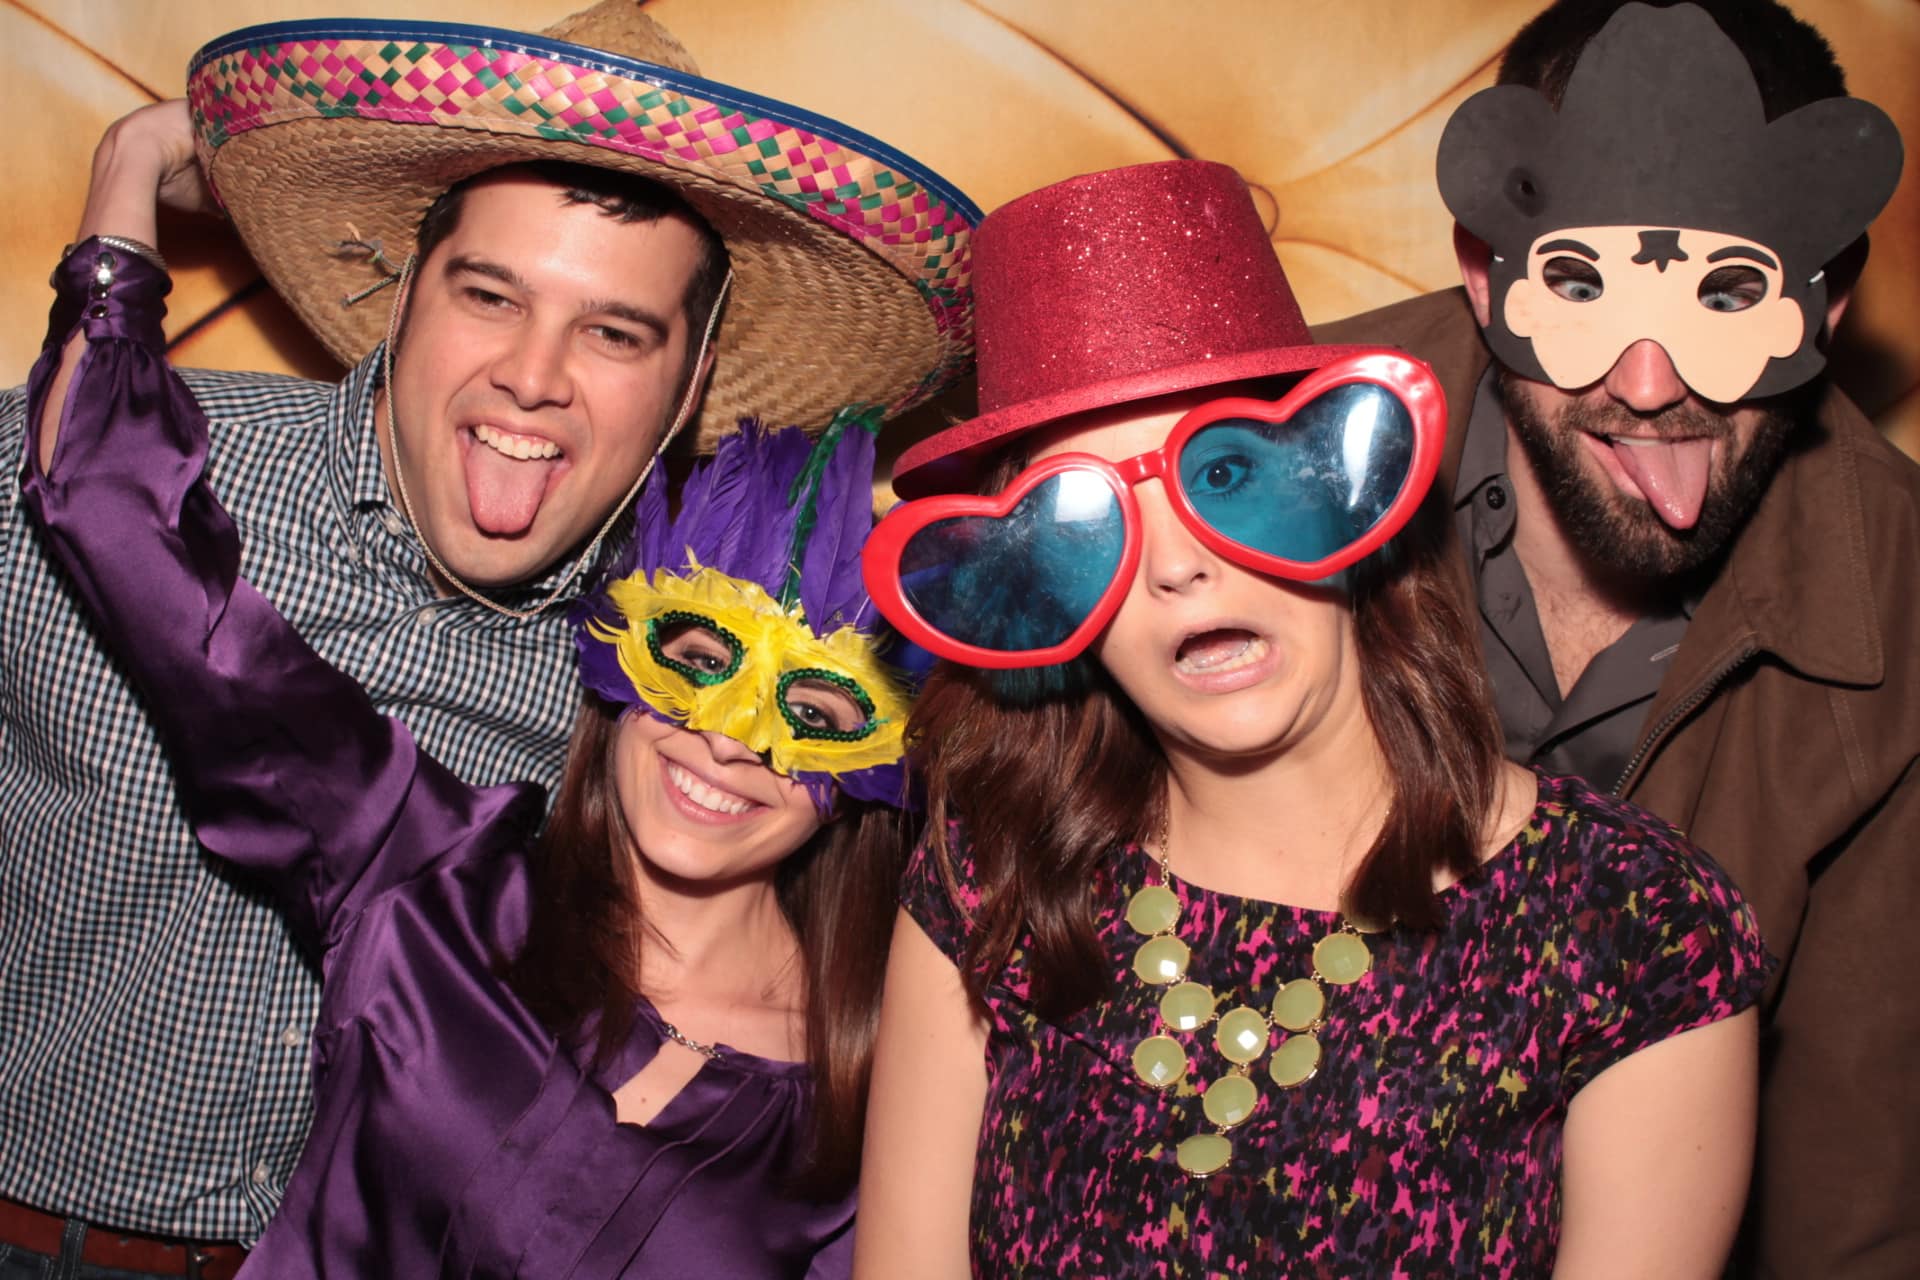 Photobooth-Rental-Austin-San Marcos-Wedding-Reception-Memories-No. 1-Awesome-Fun-Props